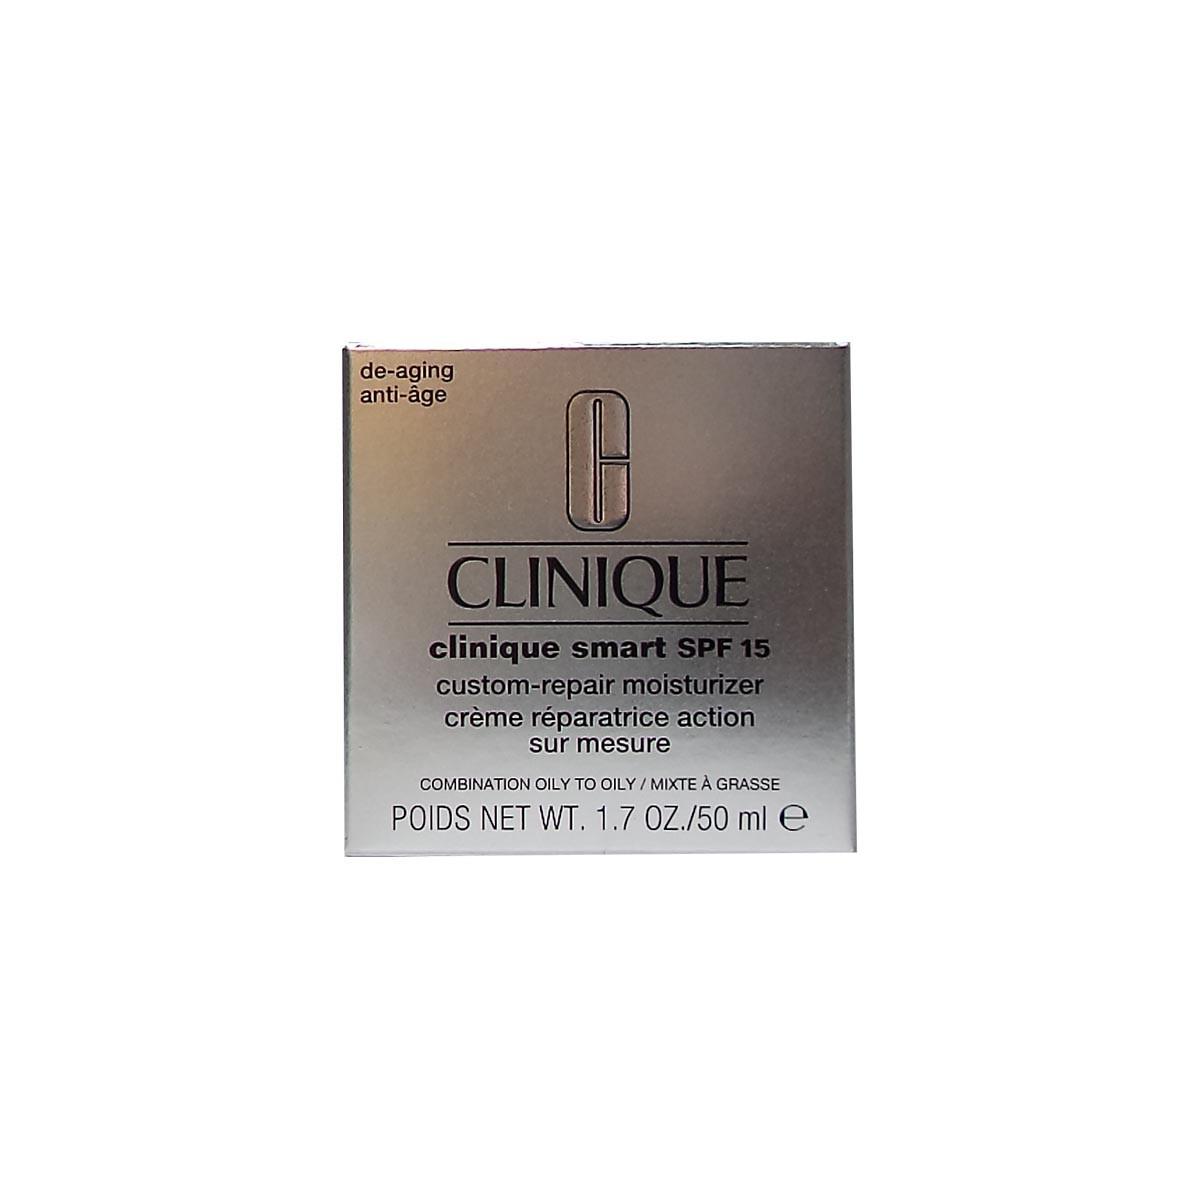 clinique-krem-smart-spf15-custom-repair-moisturizer-antiage-seche-a-tres-seche-50ml